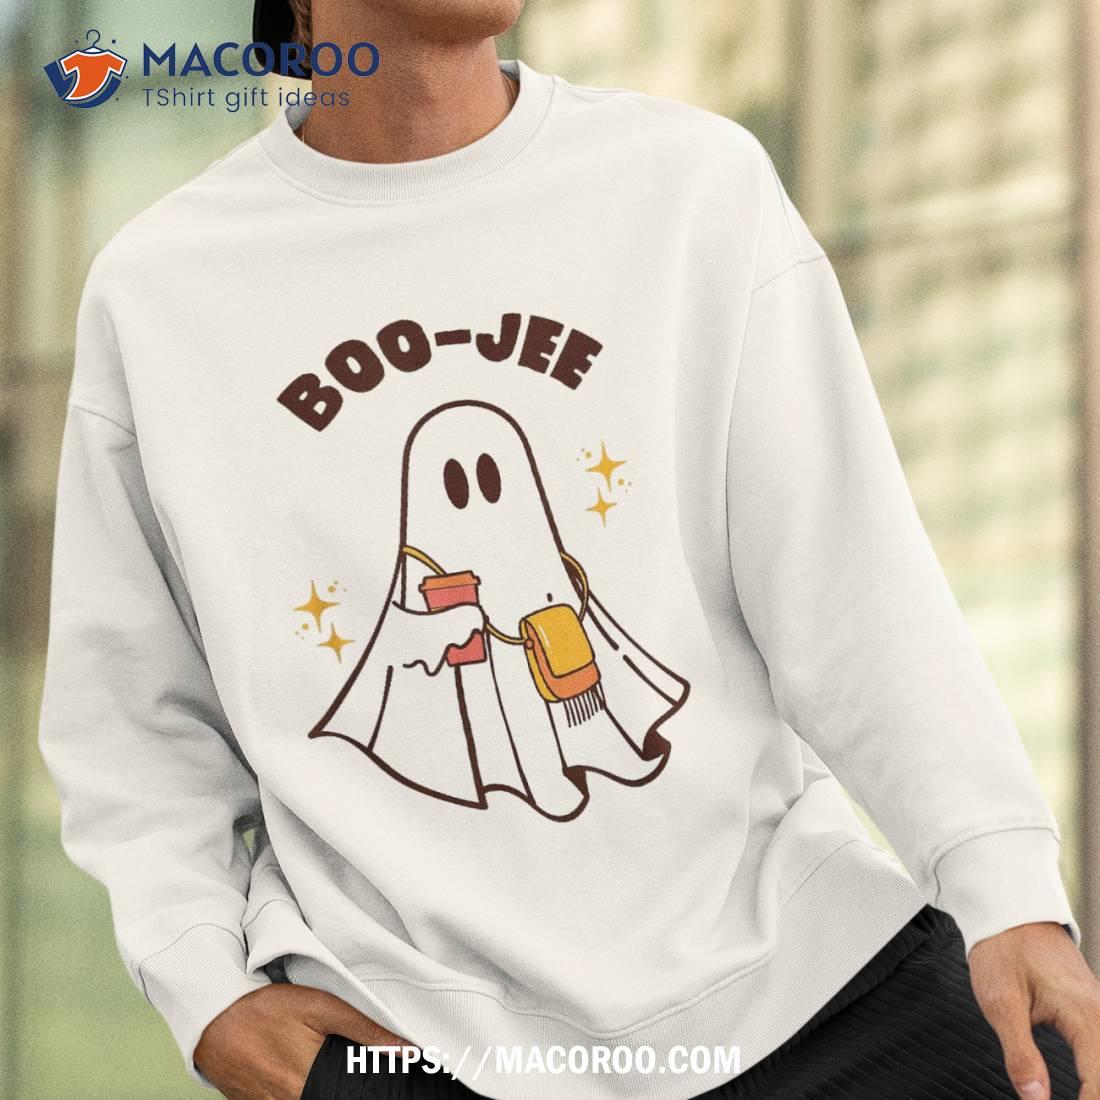  Spooky Season Funny Ghost Halloween Costume Boujee Boo-Jee  Sweatshirt : Clothing, Shoes & Jewelry